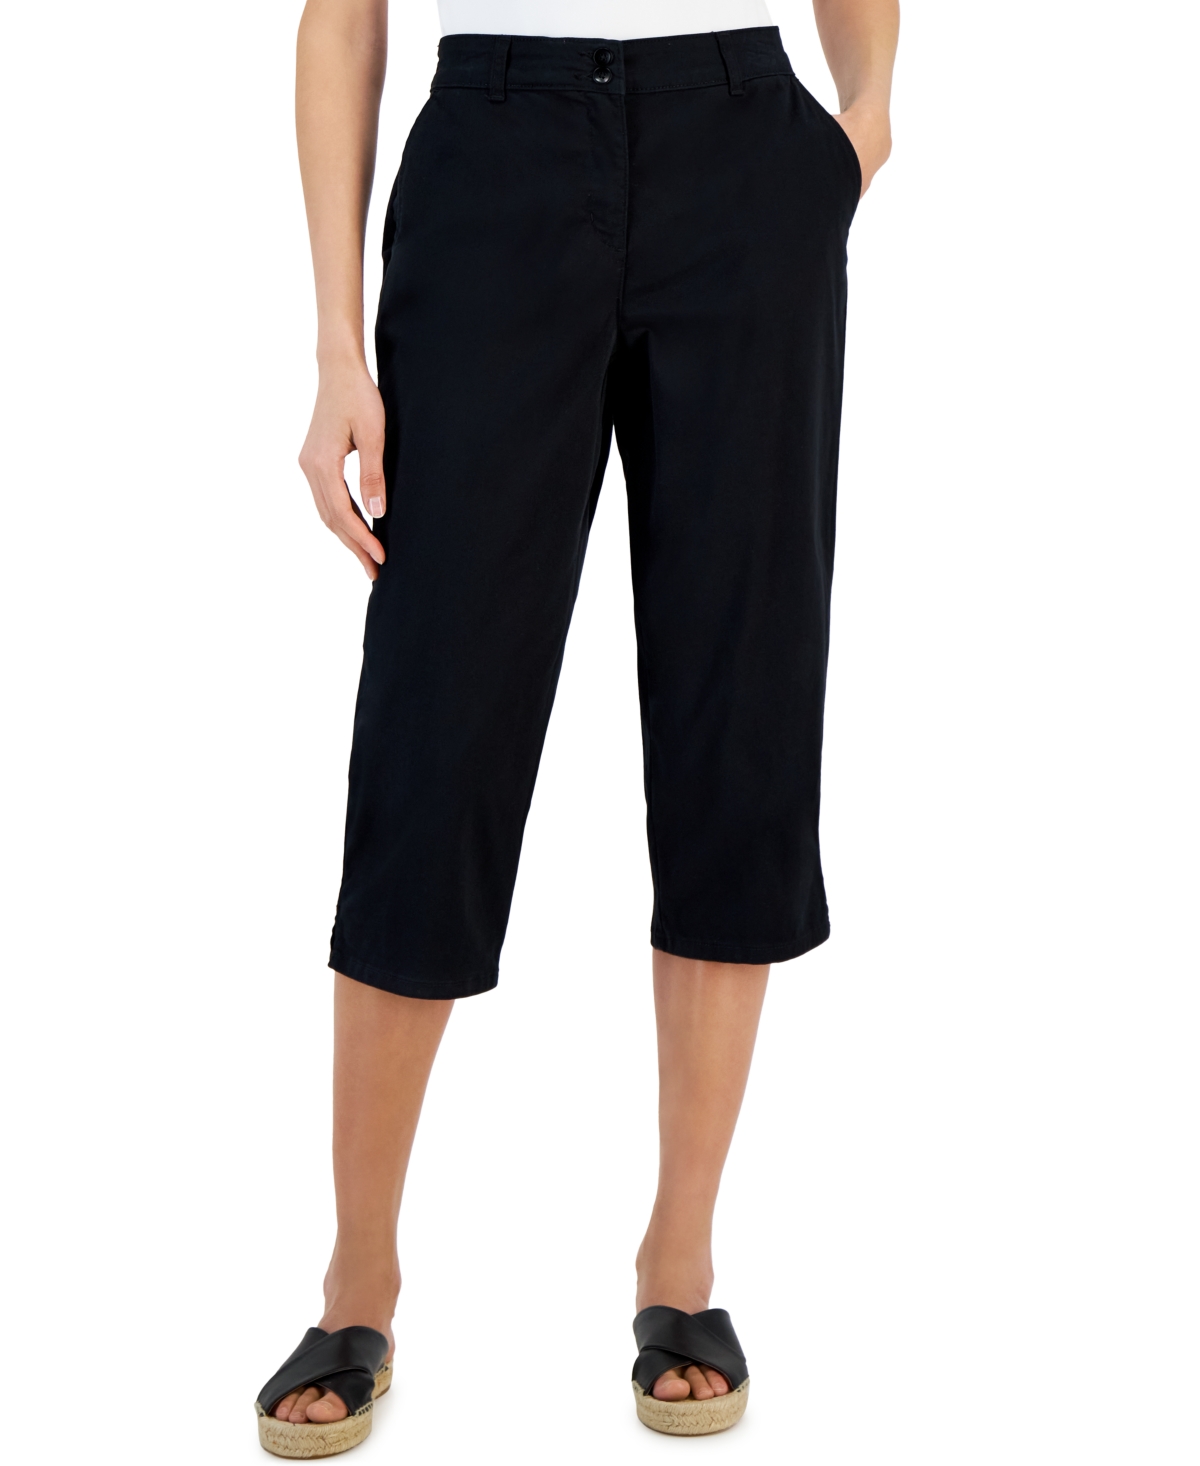 Petite Comfort Waist High-Rise Capri Pants, Created for Macy's - Intrepid Blue